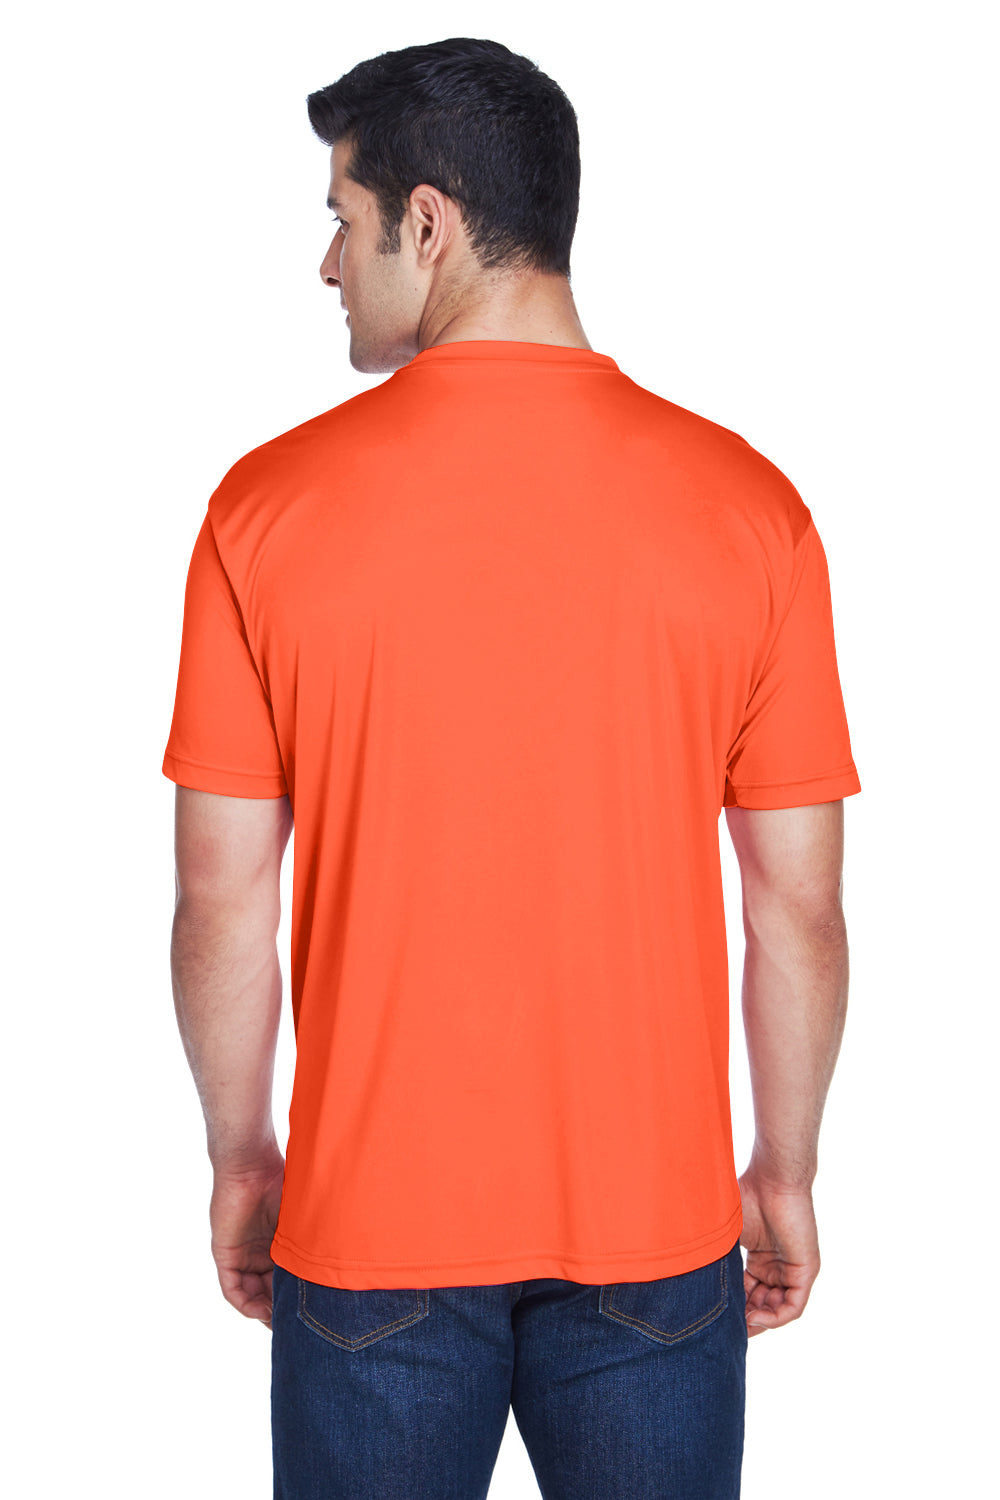 UltraClub 8420 Mens Cool & Dry Performance Moisture Wicking Short Sleeve Crewneck T-Shirt Orange Back